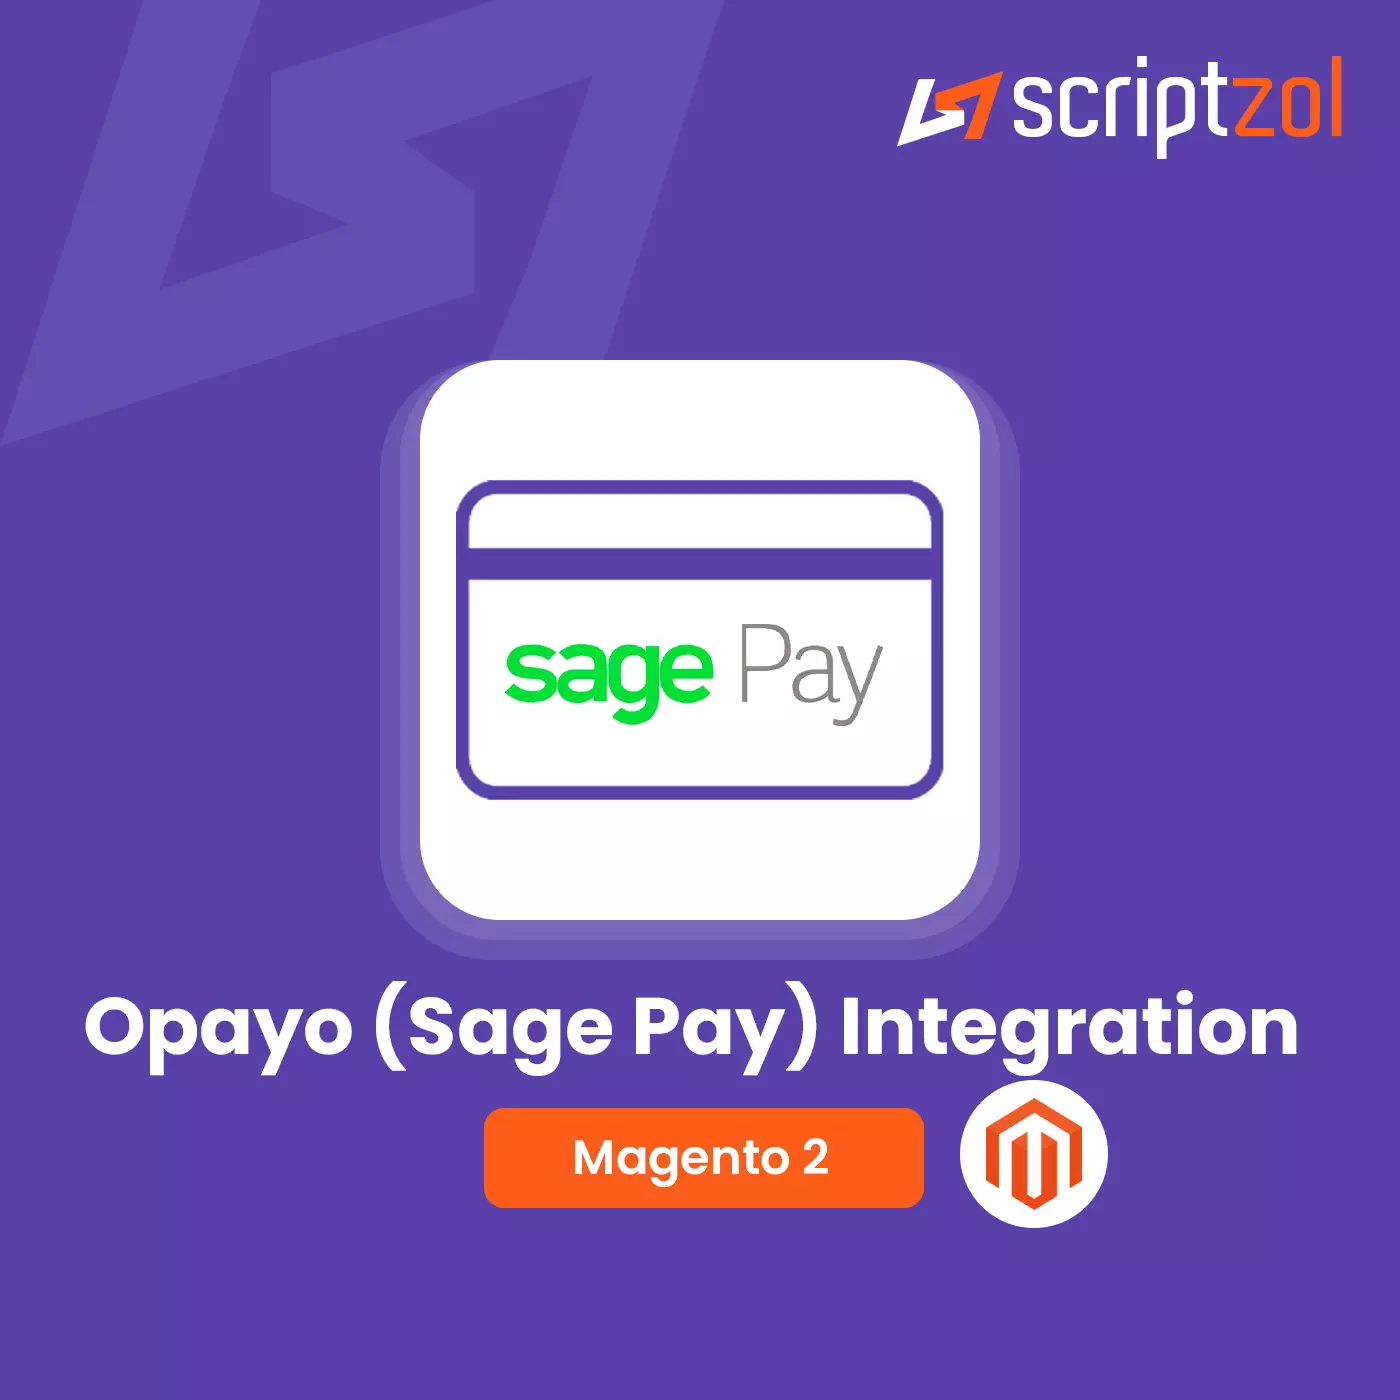 Magento 2 Opayo Sage Pay Integration